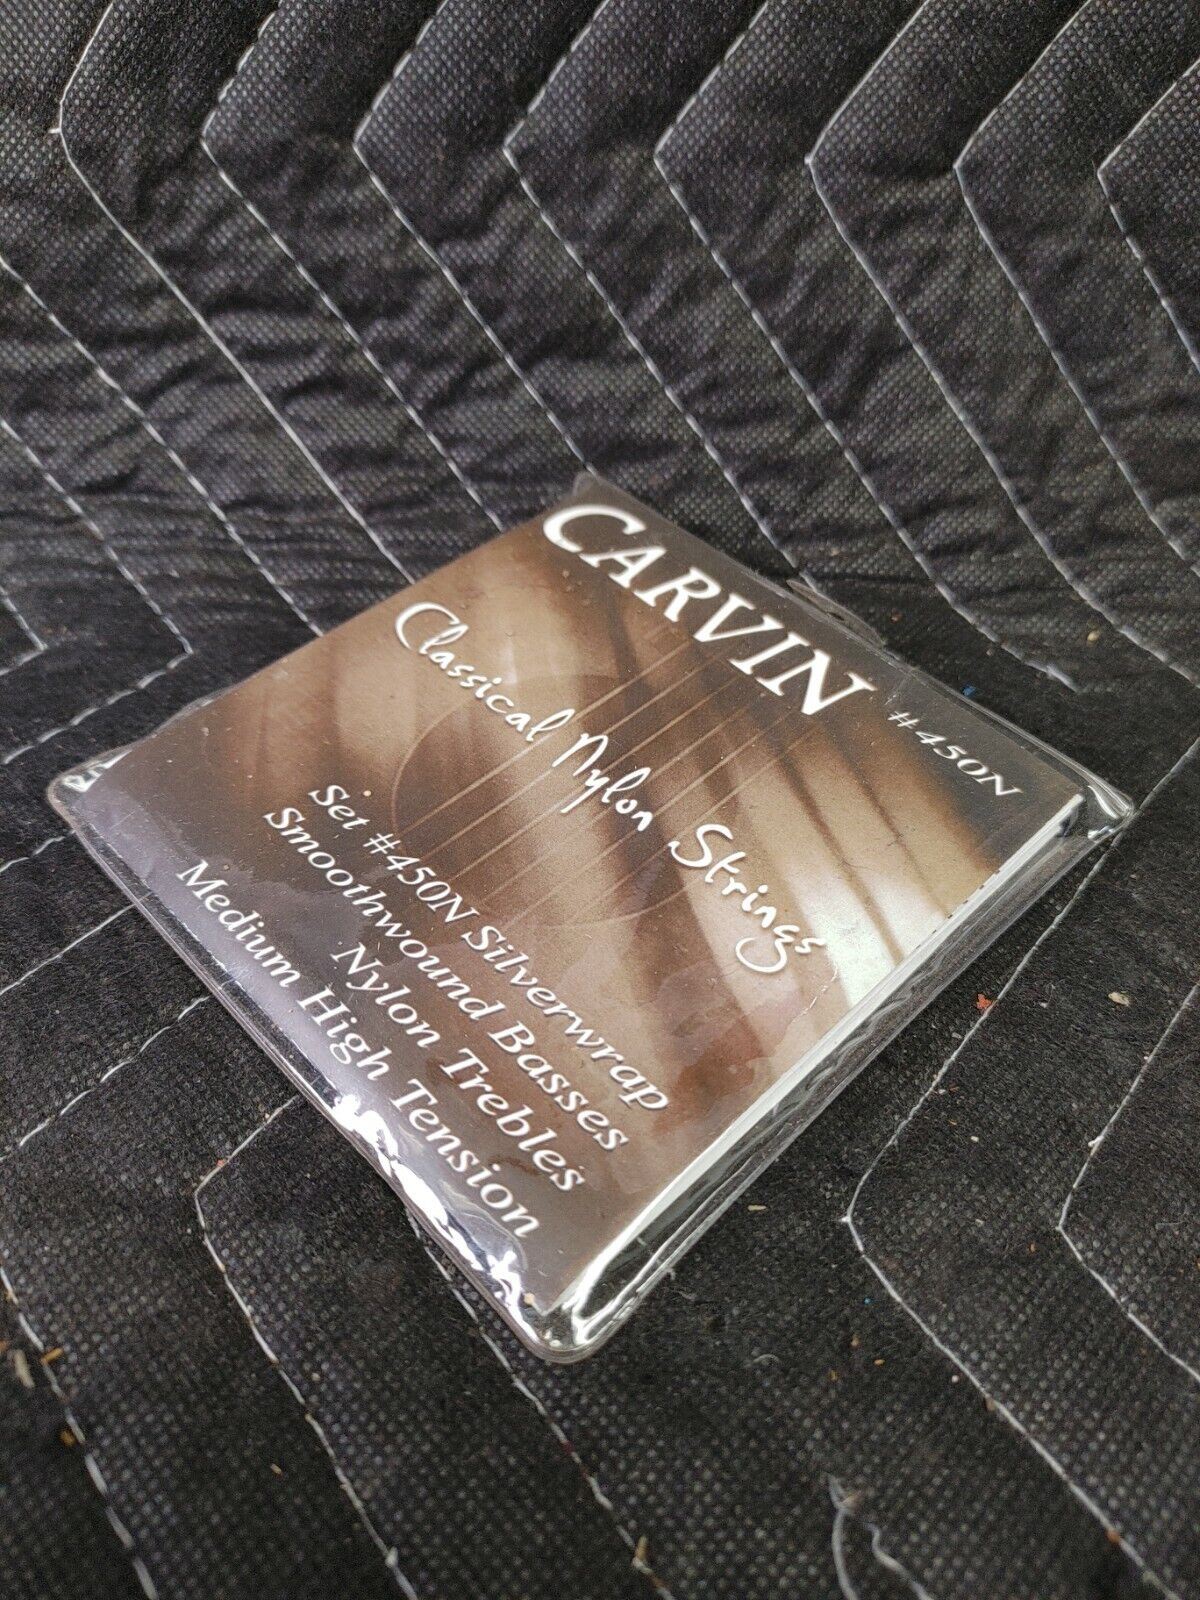 Carvin #450N Classical Guitar Silverwrap Nylon Strings - Medium High Tension NOS